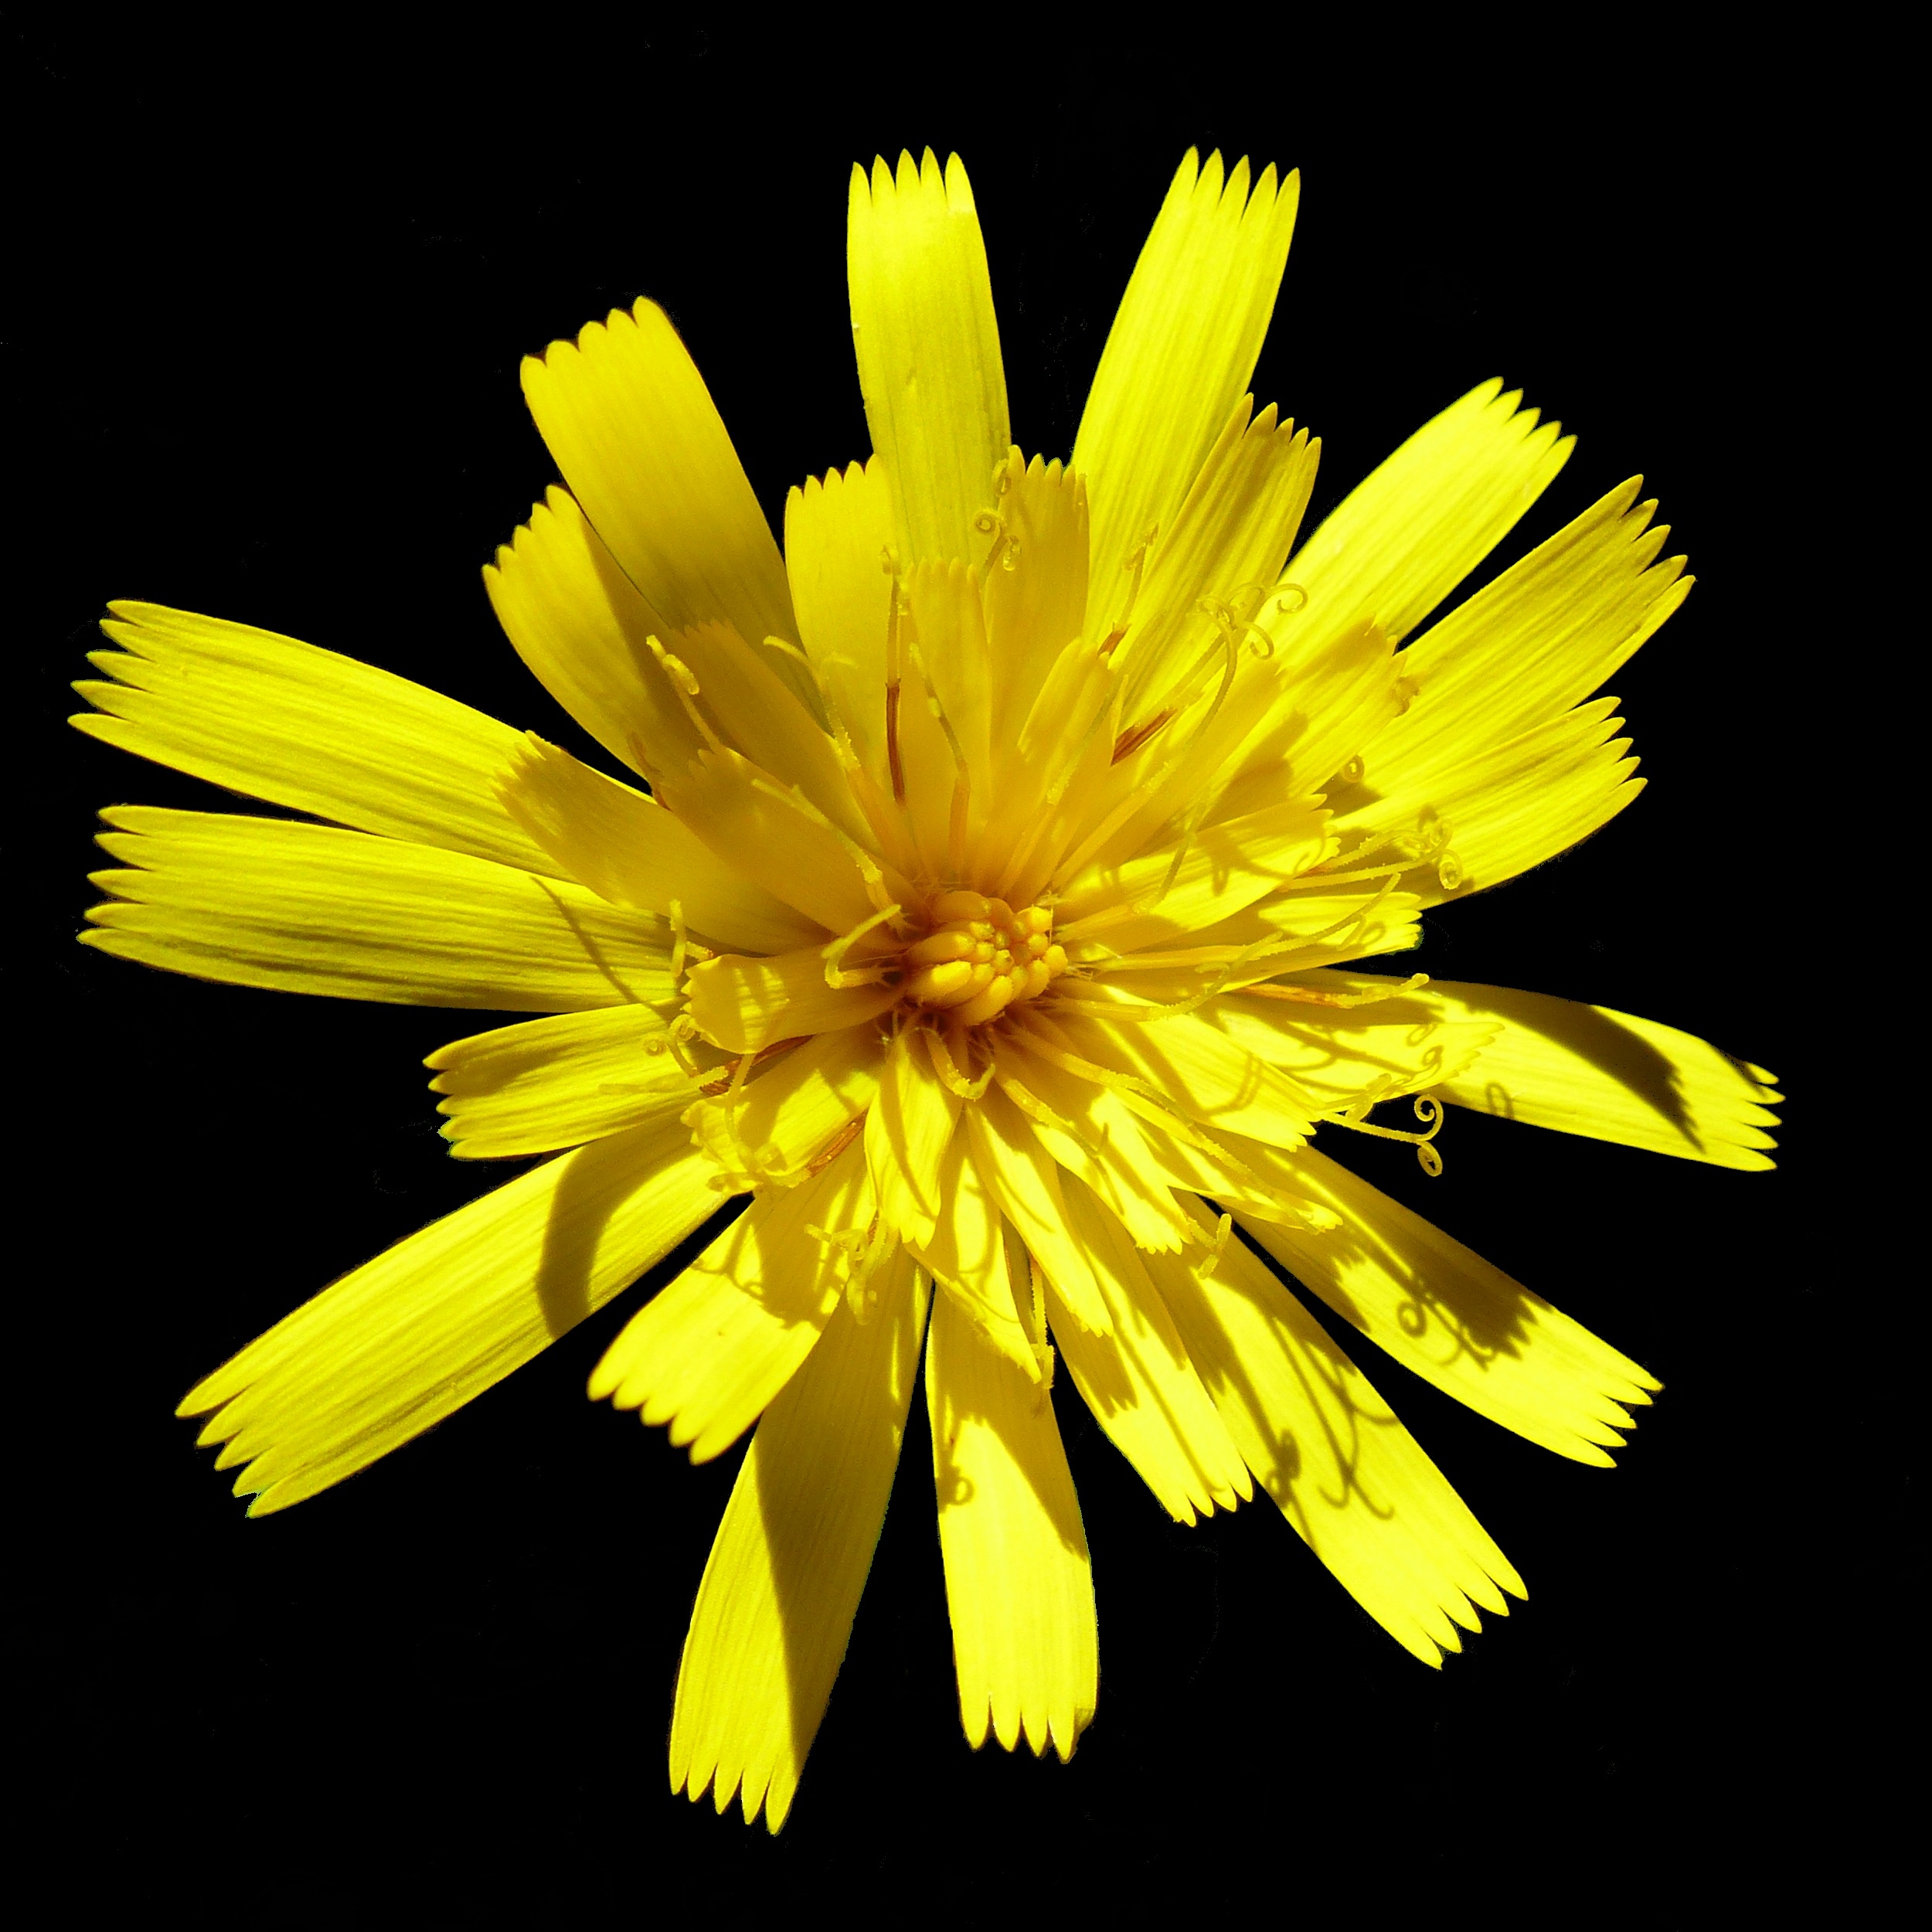 Желтый цветок из семейства маргариток на черном фоне